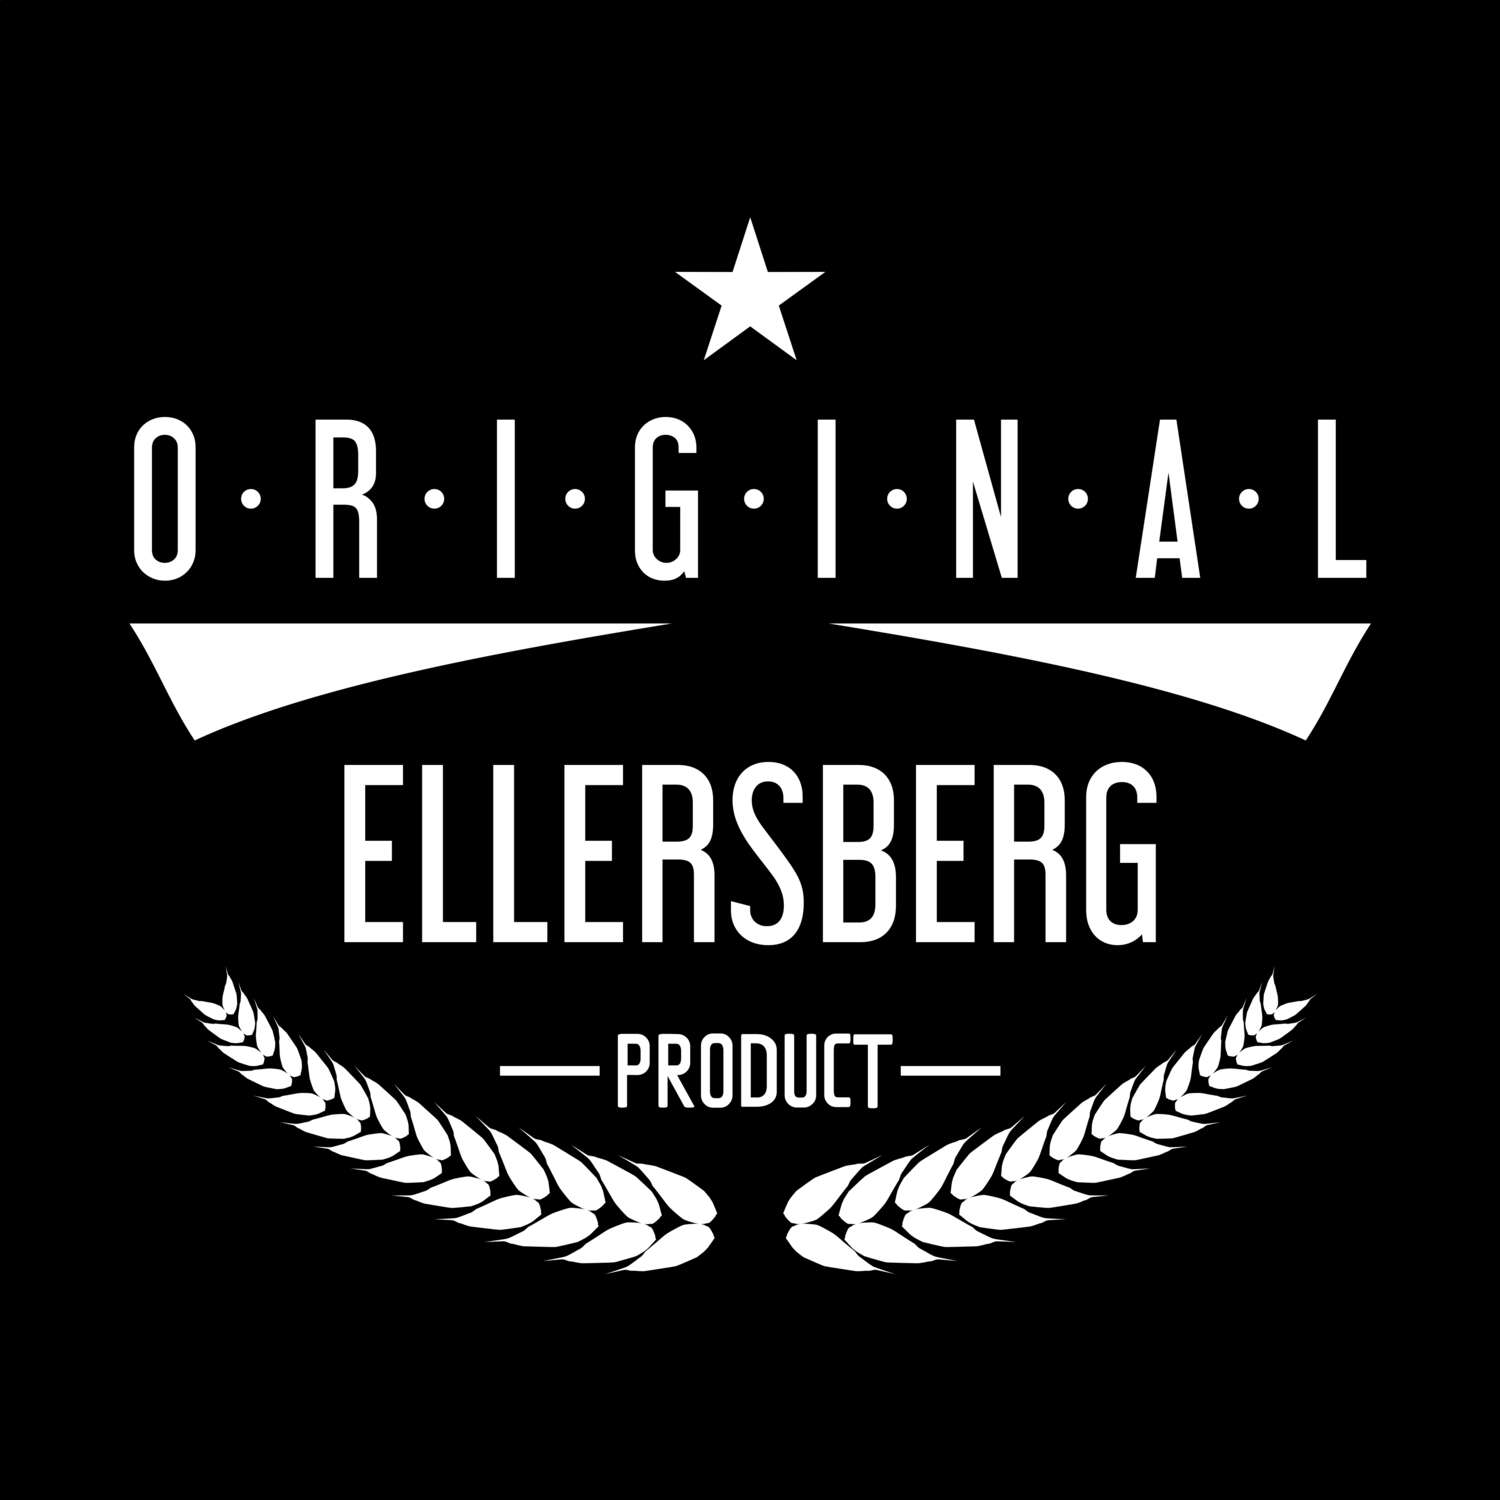 Ellersberg T-Shirt »Original Product«